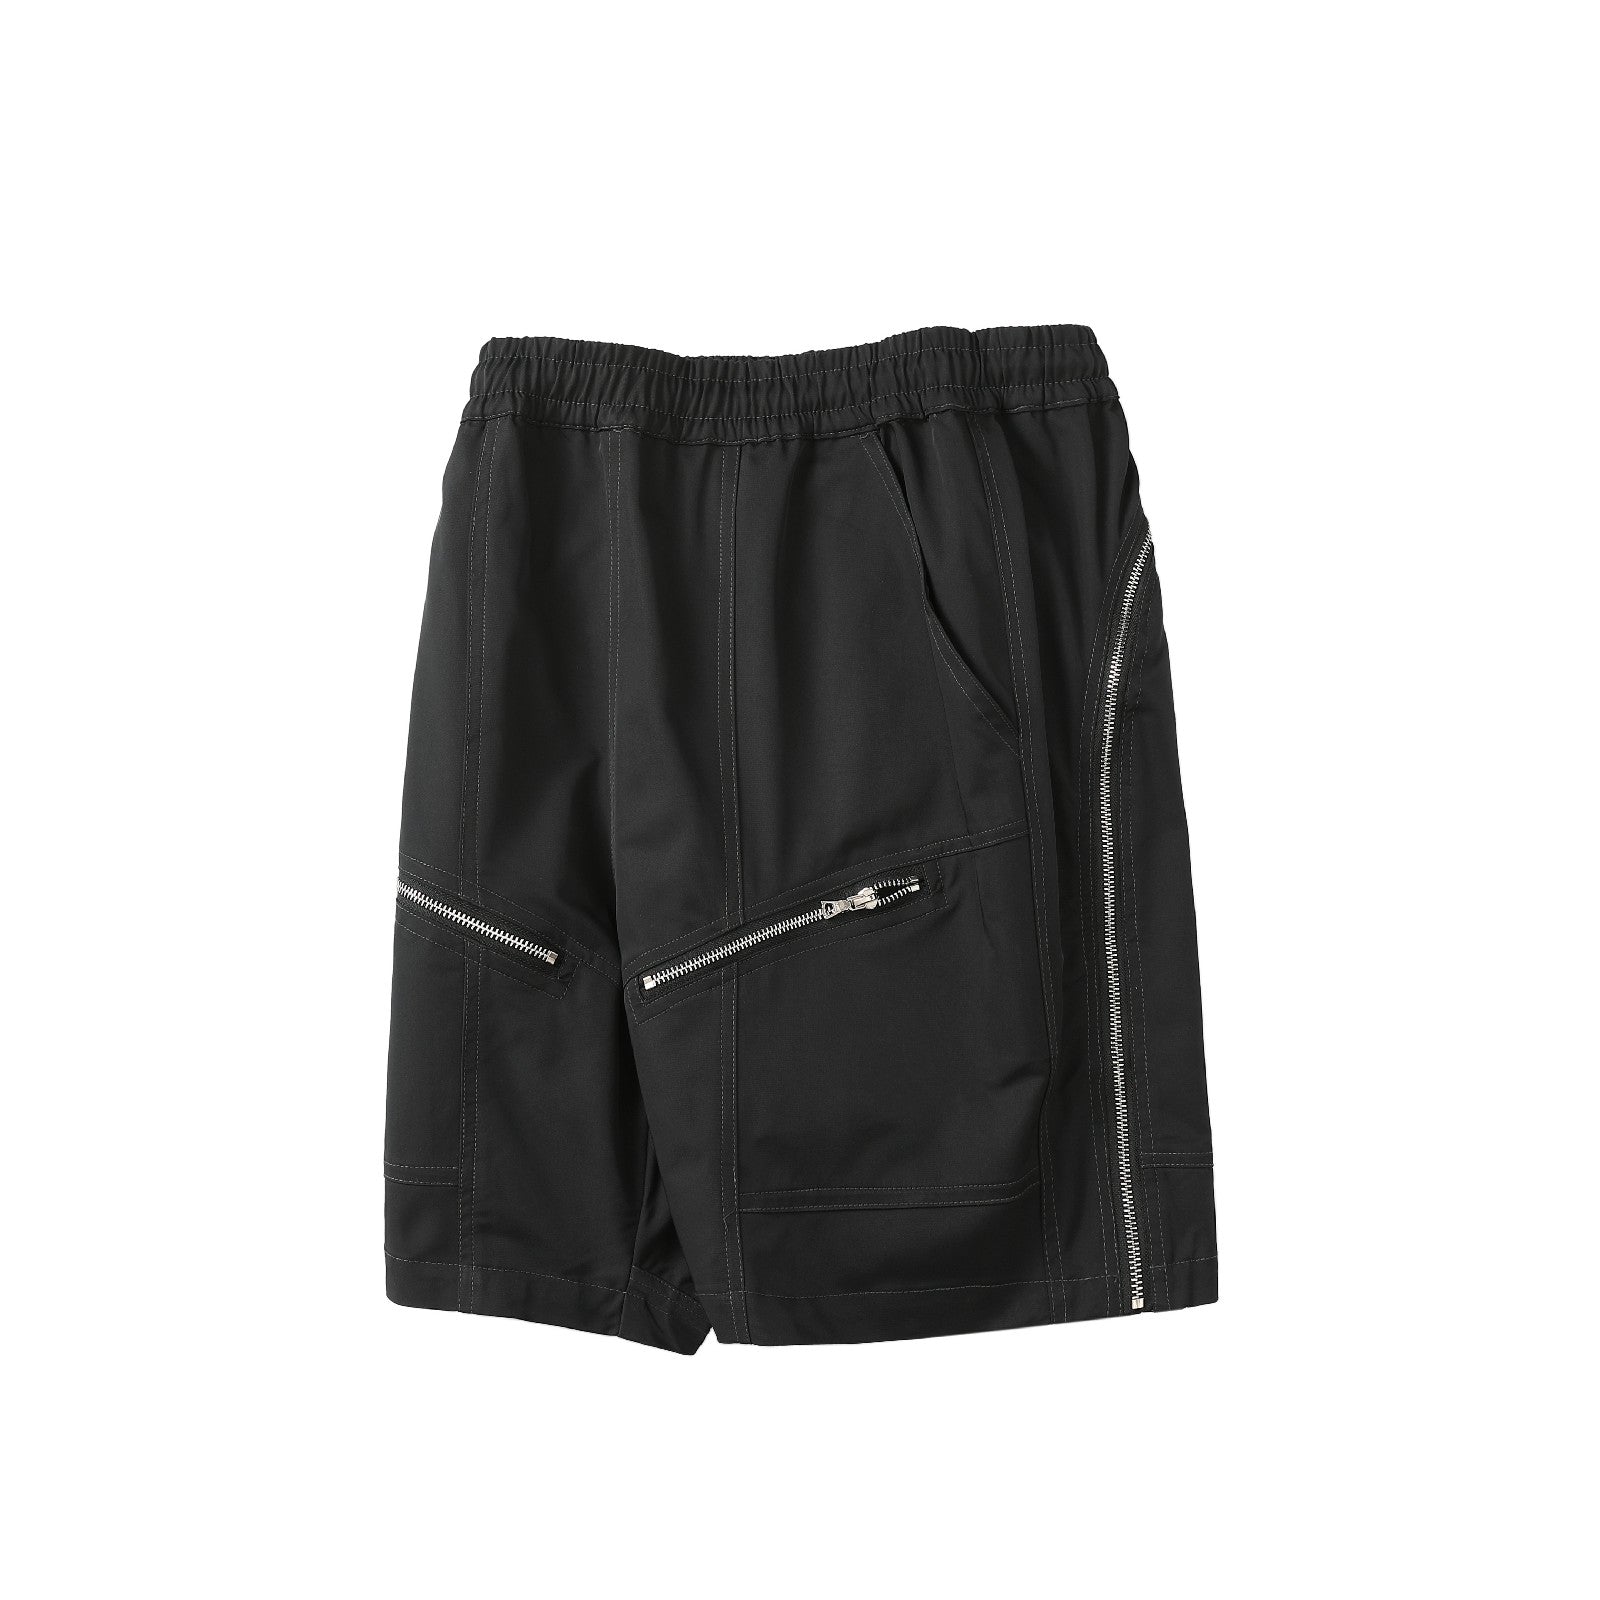 'Zip Up' Shorts - Santo 